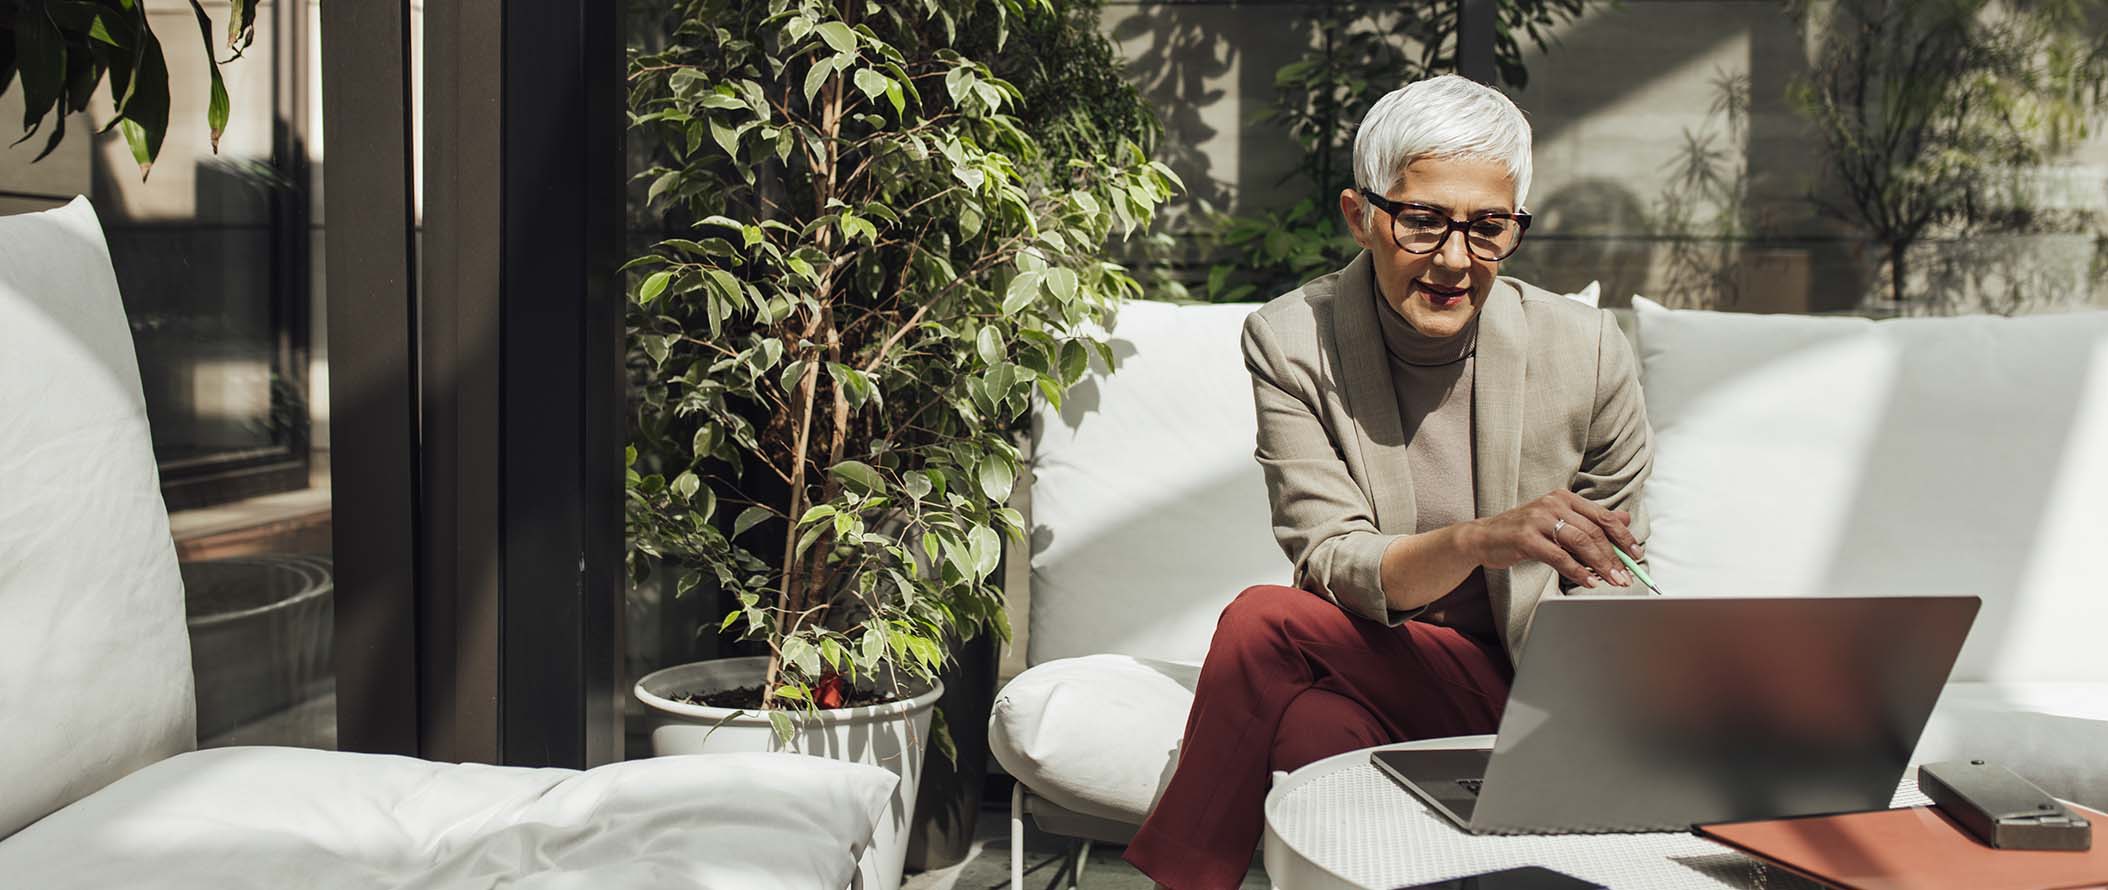 CORP-Senior-Businesswoman-Using-her-Laptop-at-Work-banner.jpg